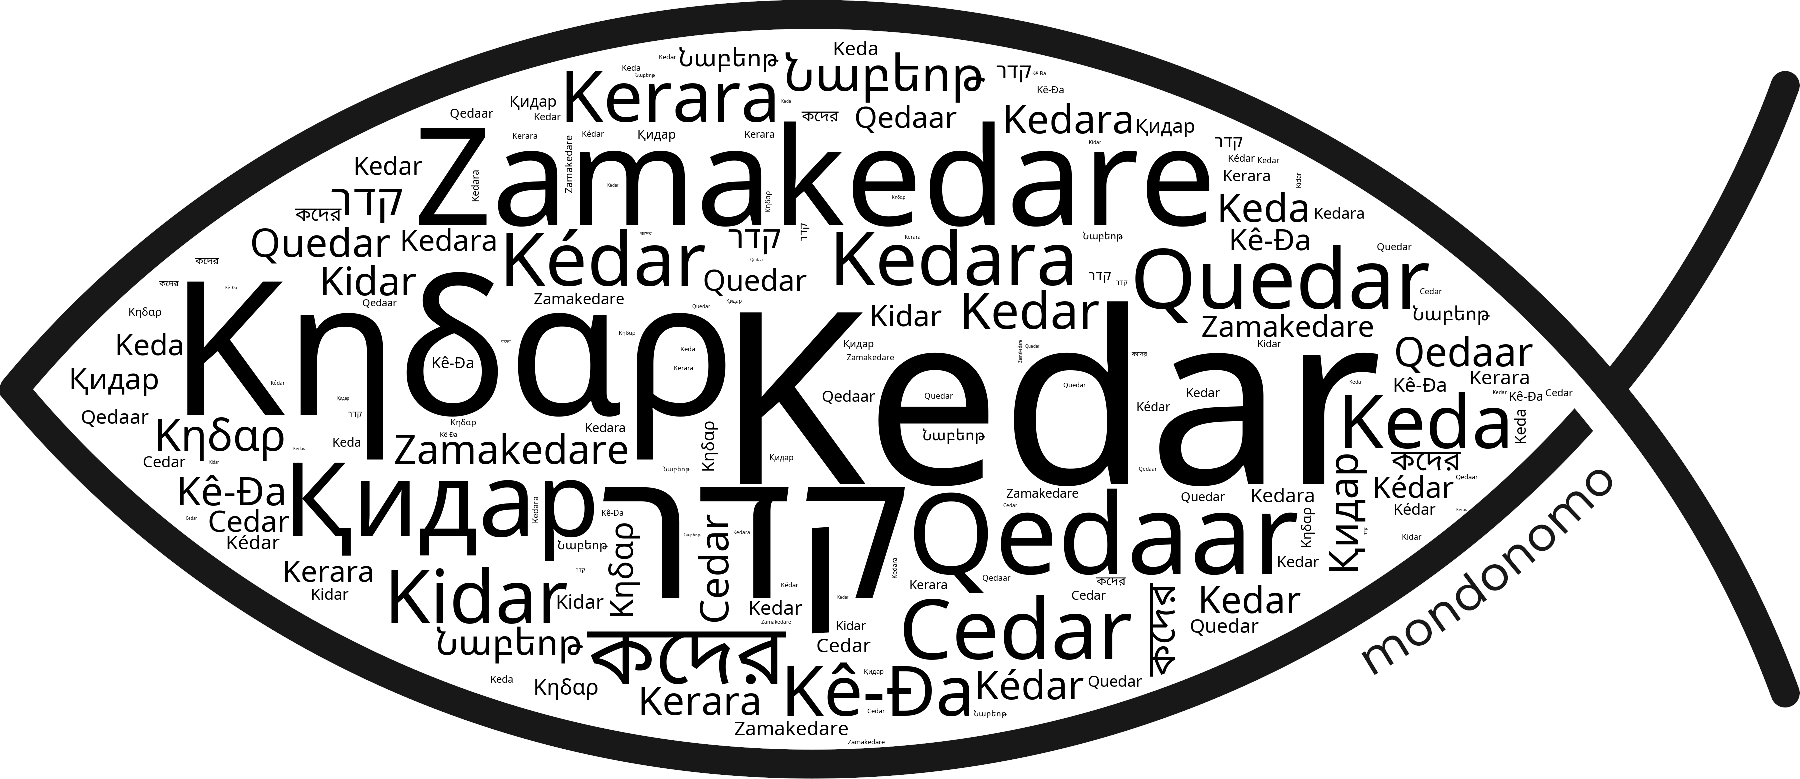 Name Kedar in the world's Bibles